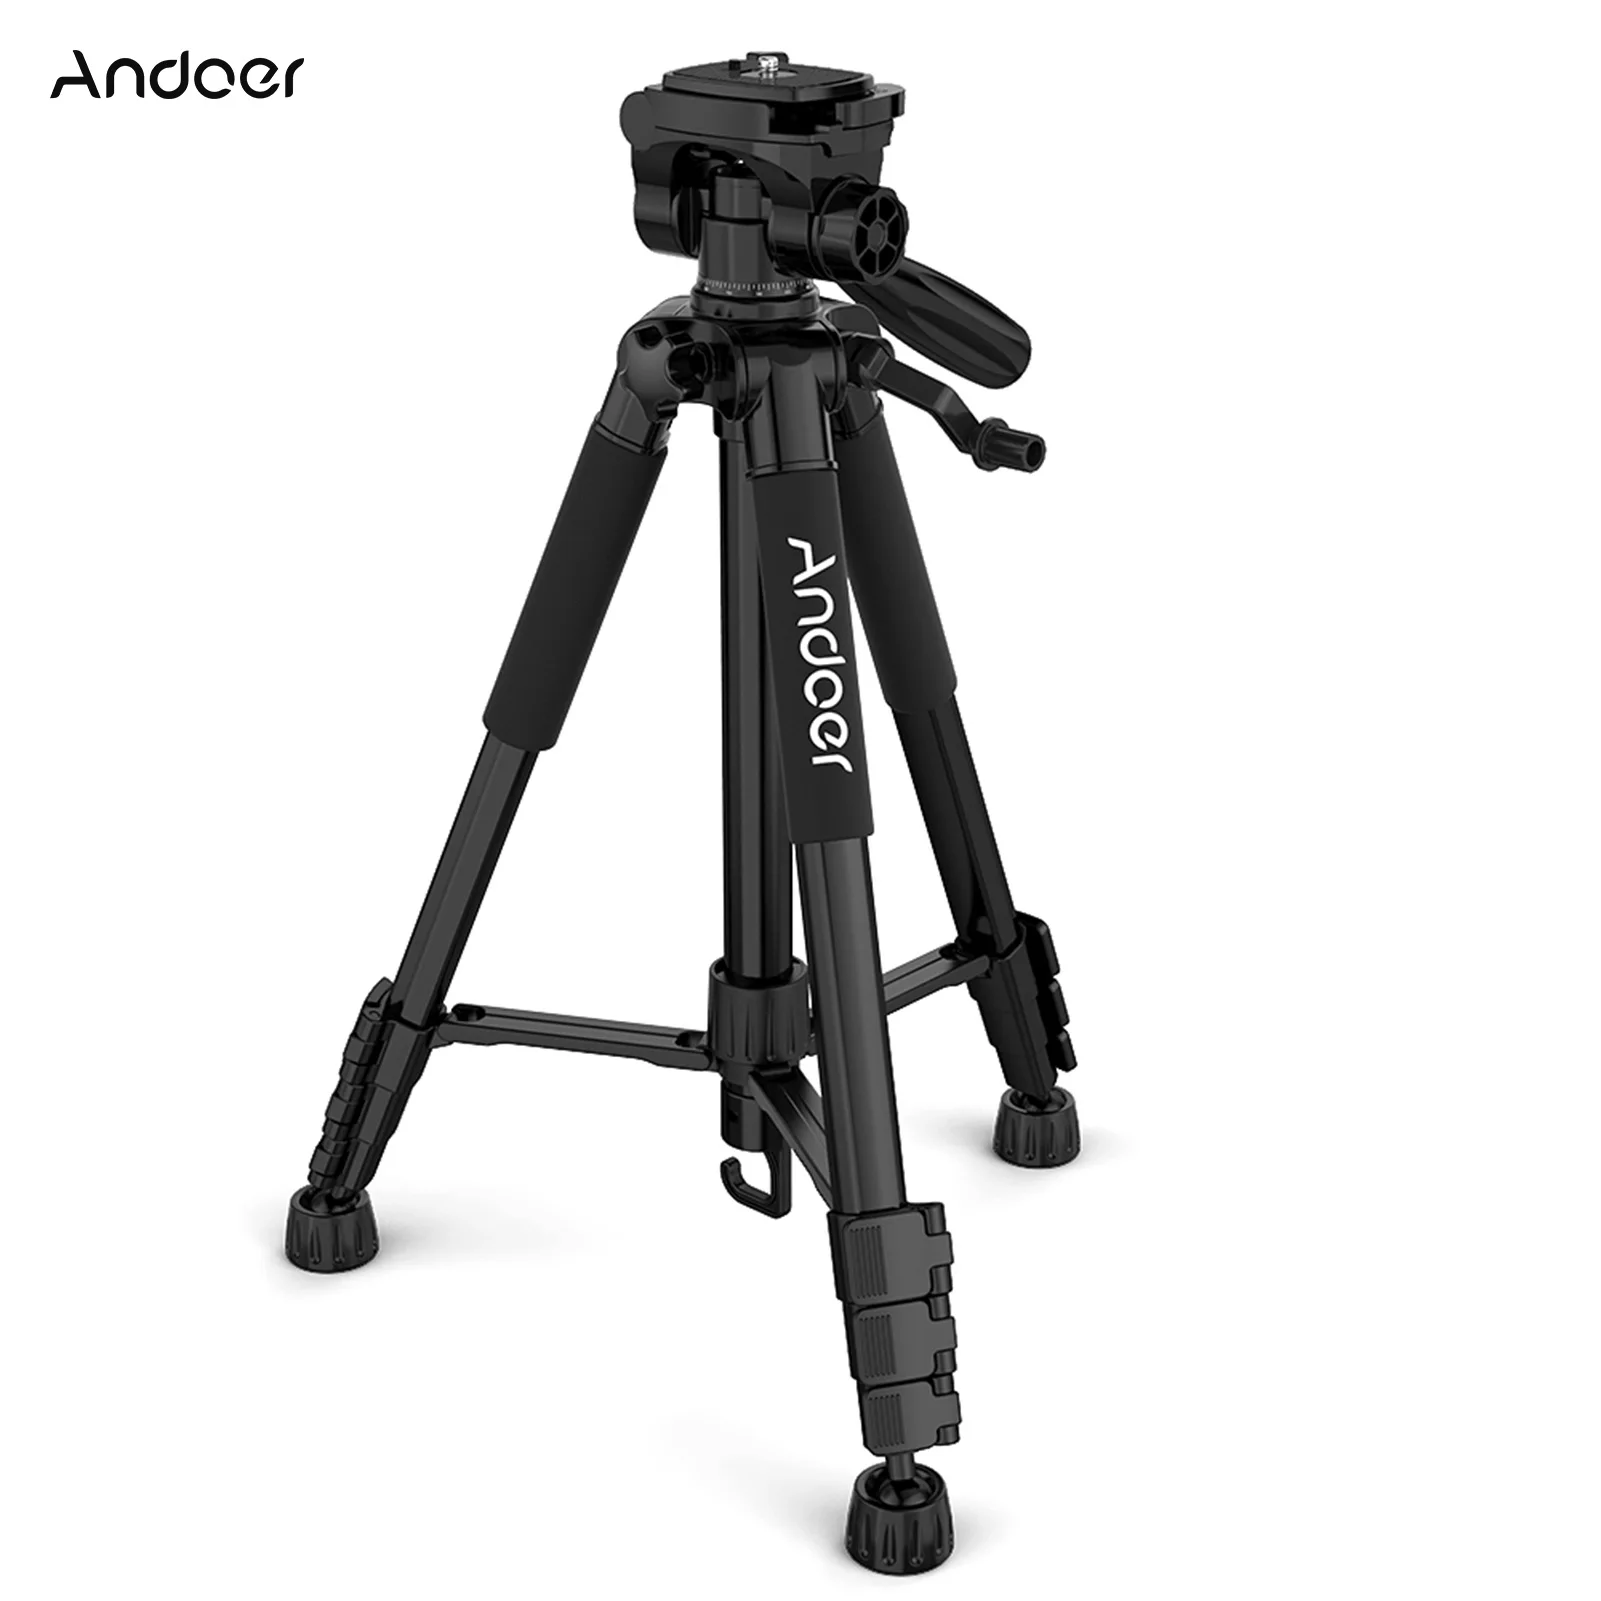 

Штатив для фотоаппарата Andoer, Штатив для путешествий, подходит для съемки видео, DSLR SLR видеокамер с сумкой для переноски, телефона